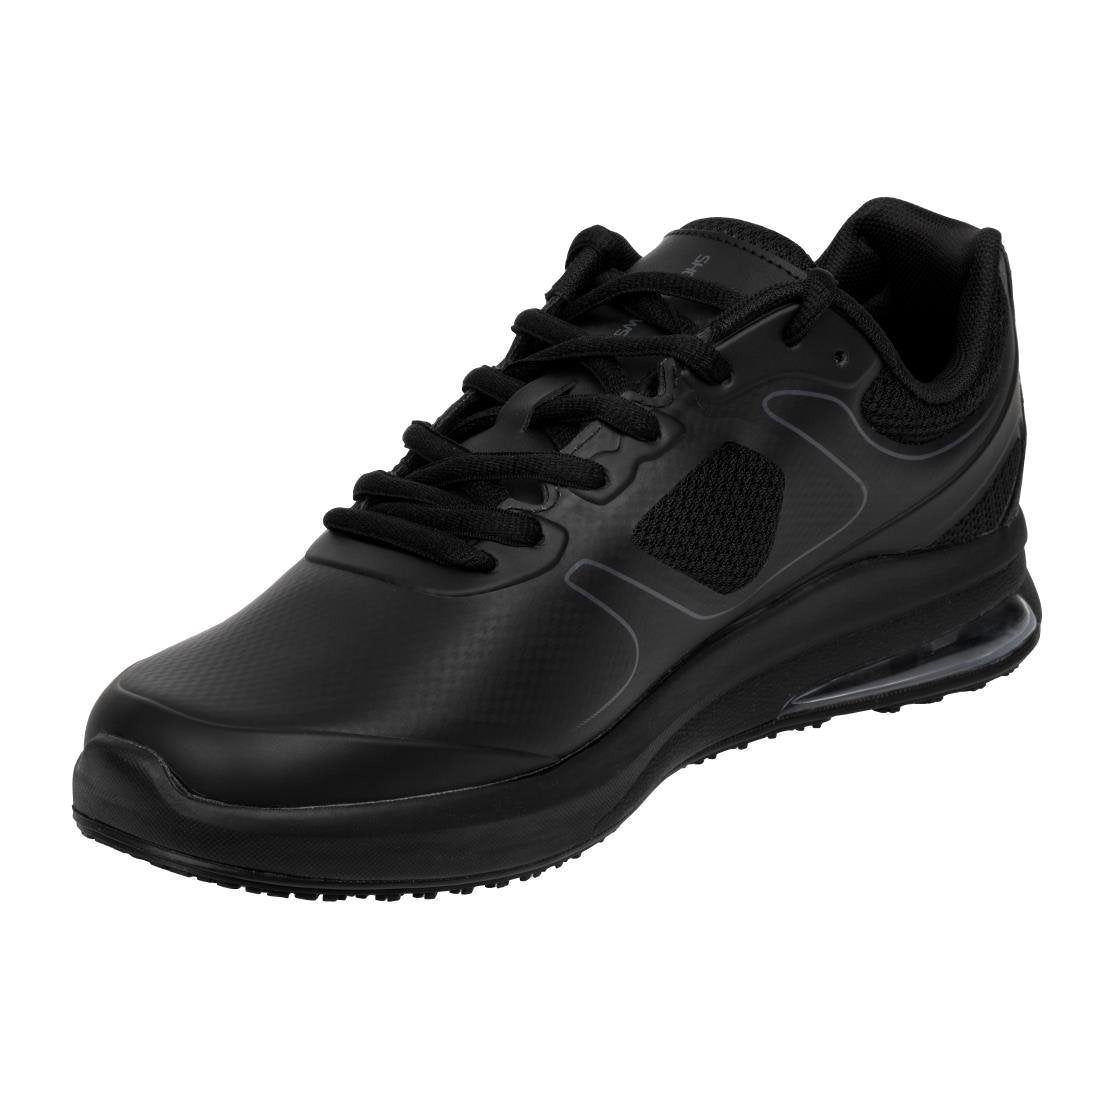 BB586-48 Shoes for Crews Men's Evolution Trainers Black Size 48